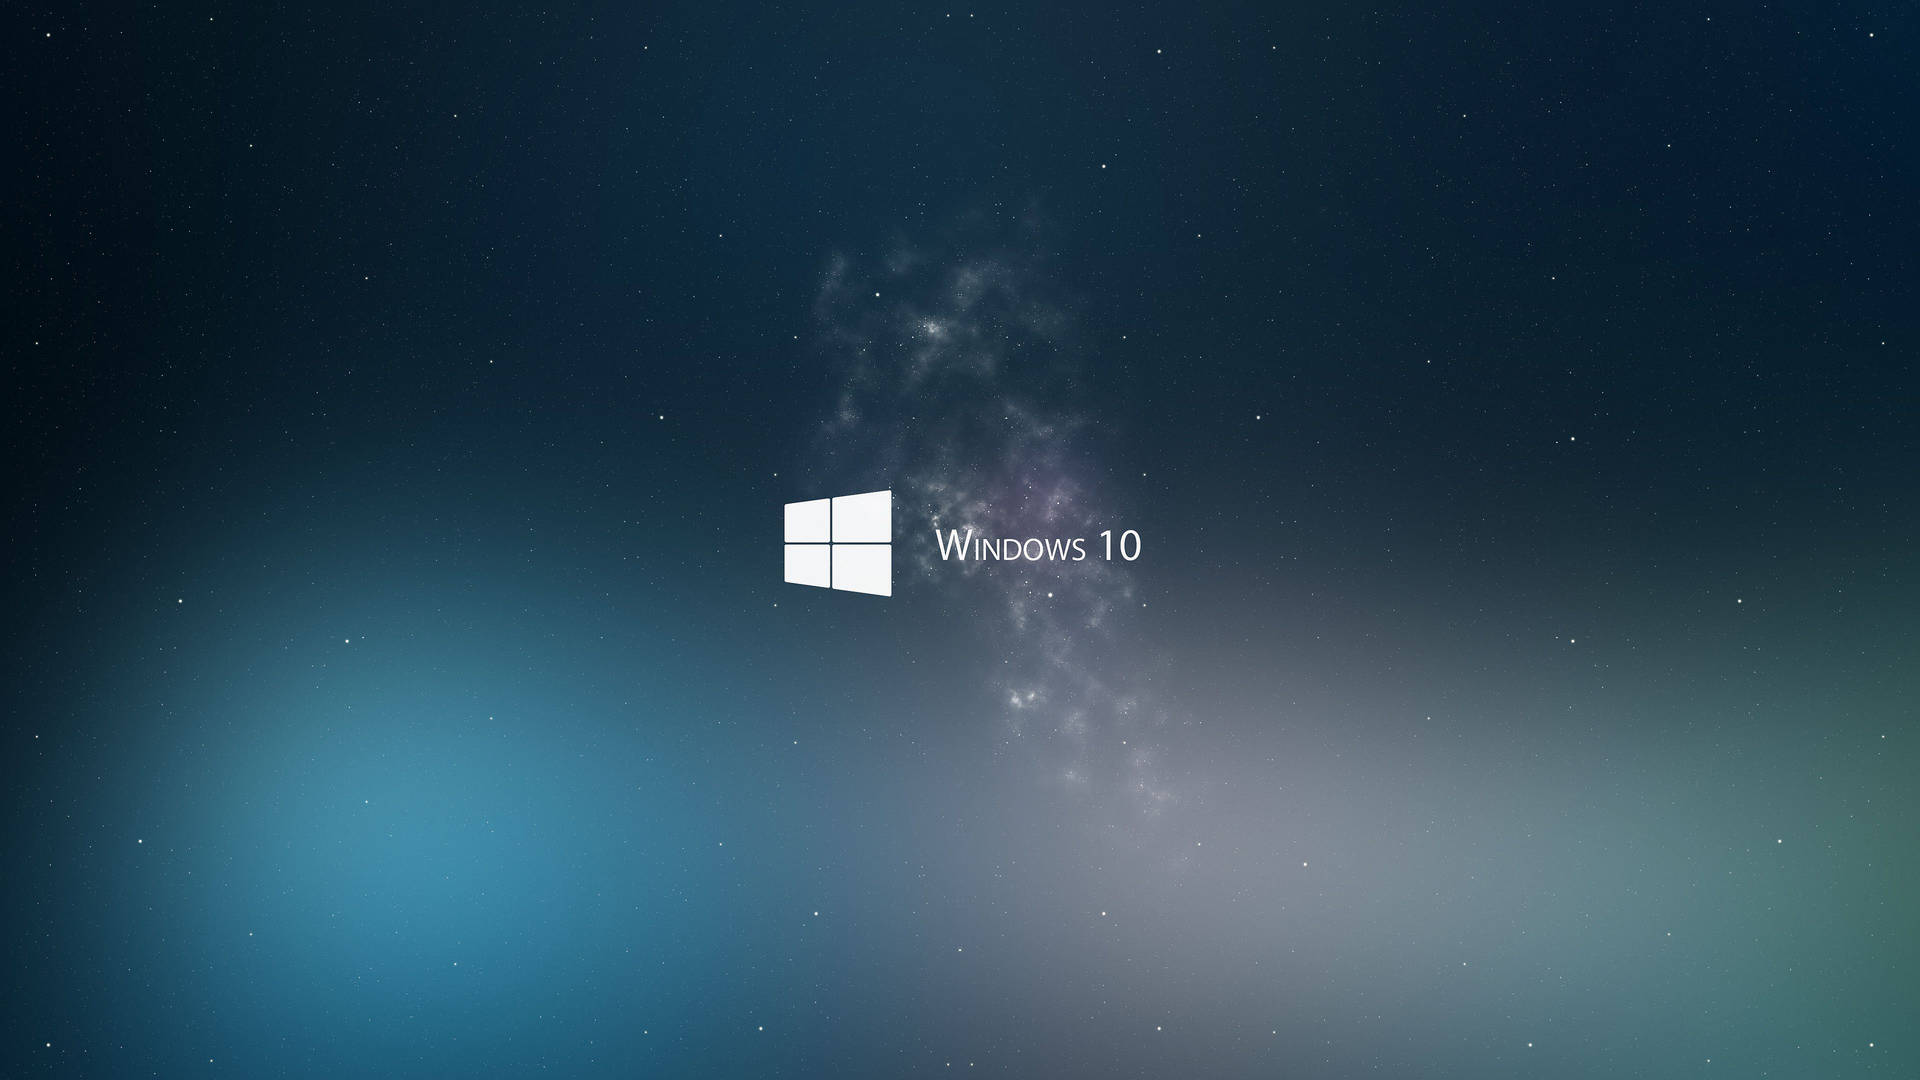 Welcome to Microsoft Windows 10 Wallpaper